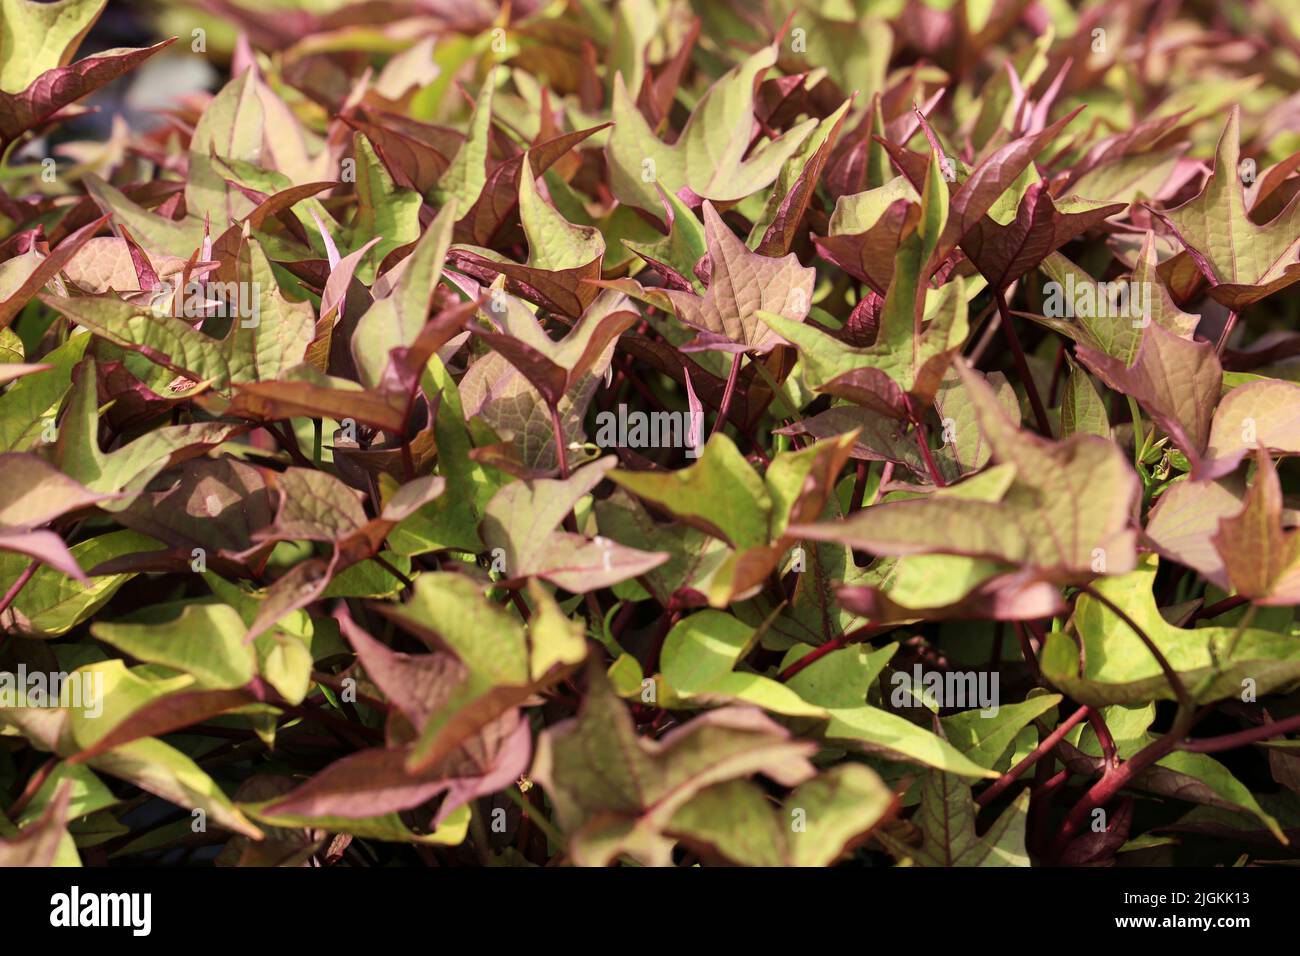 Beautiful Ipomoea Hybrida plants in the garden Stock Photo